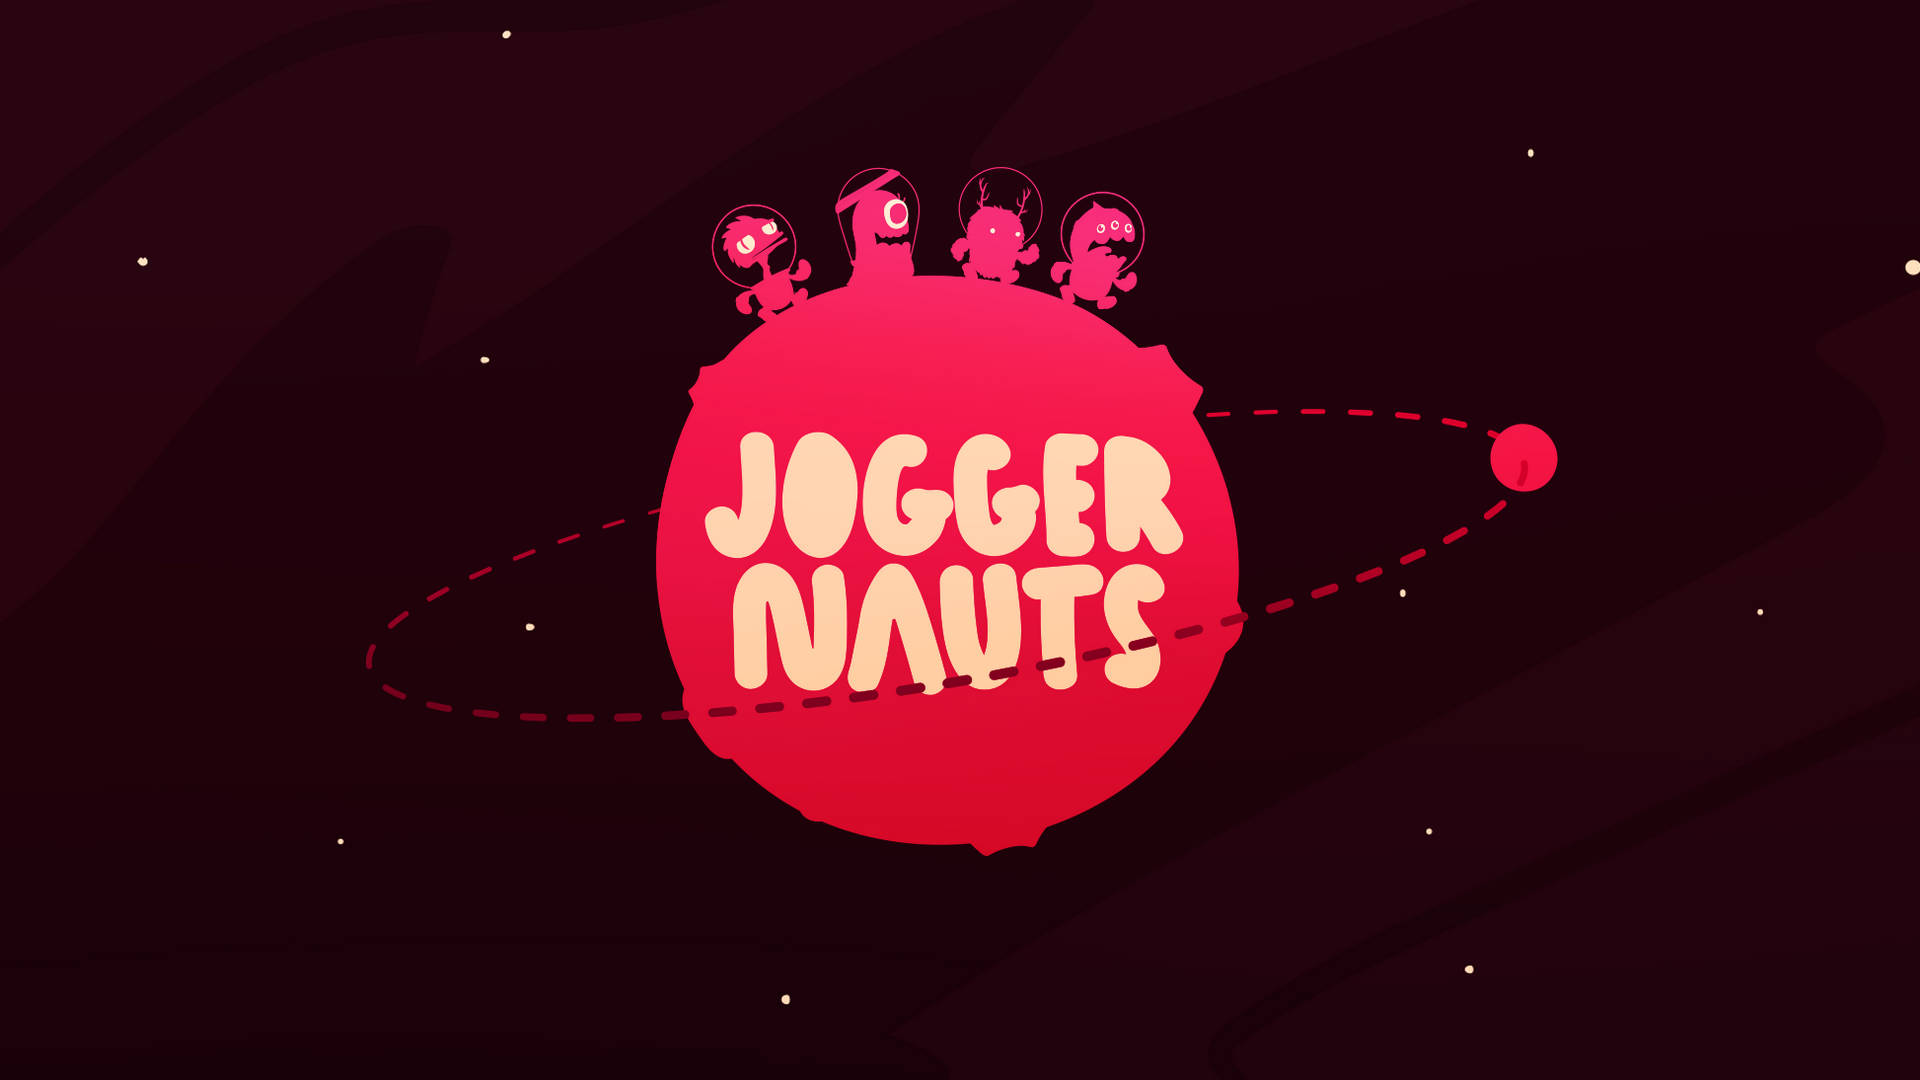 Joggernautsrosa Planet Charaktere Wallpaper